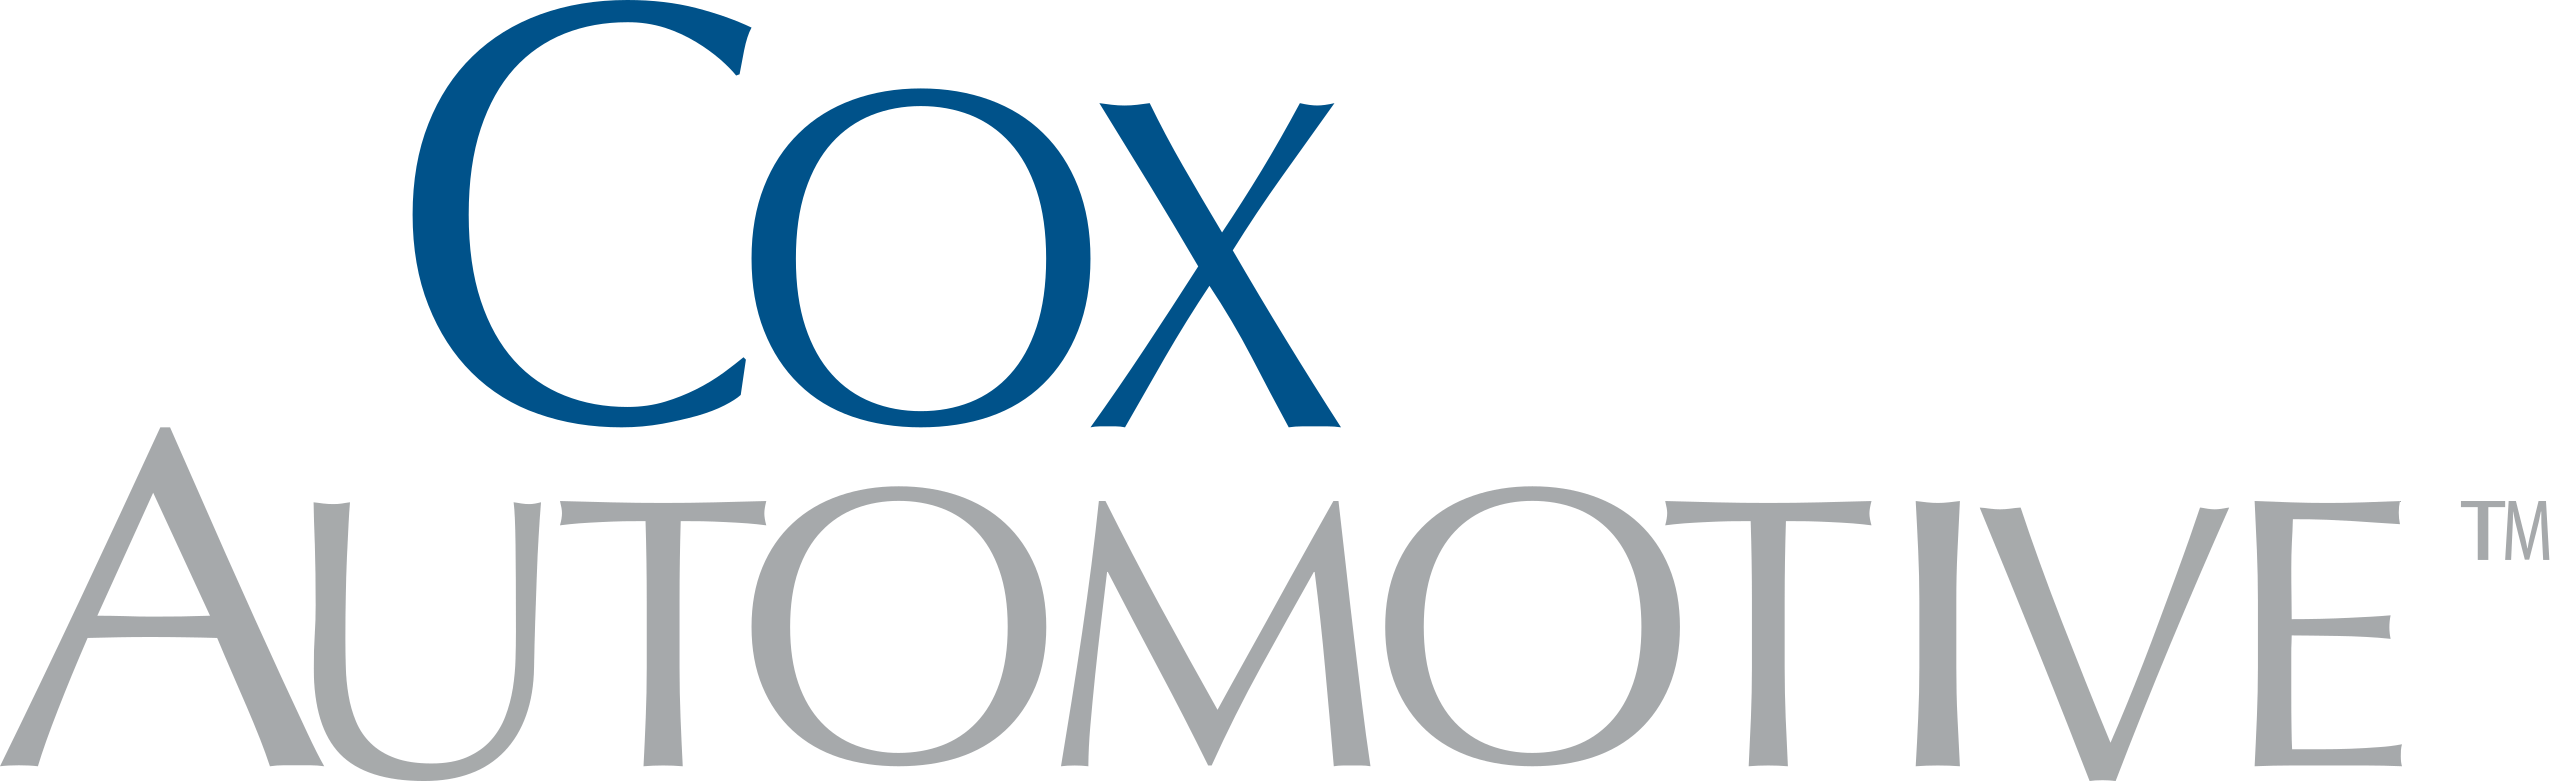 2560px-Cox_Automotive_logo.svg